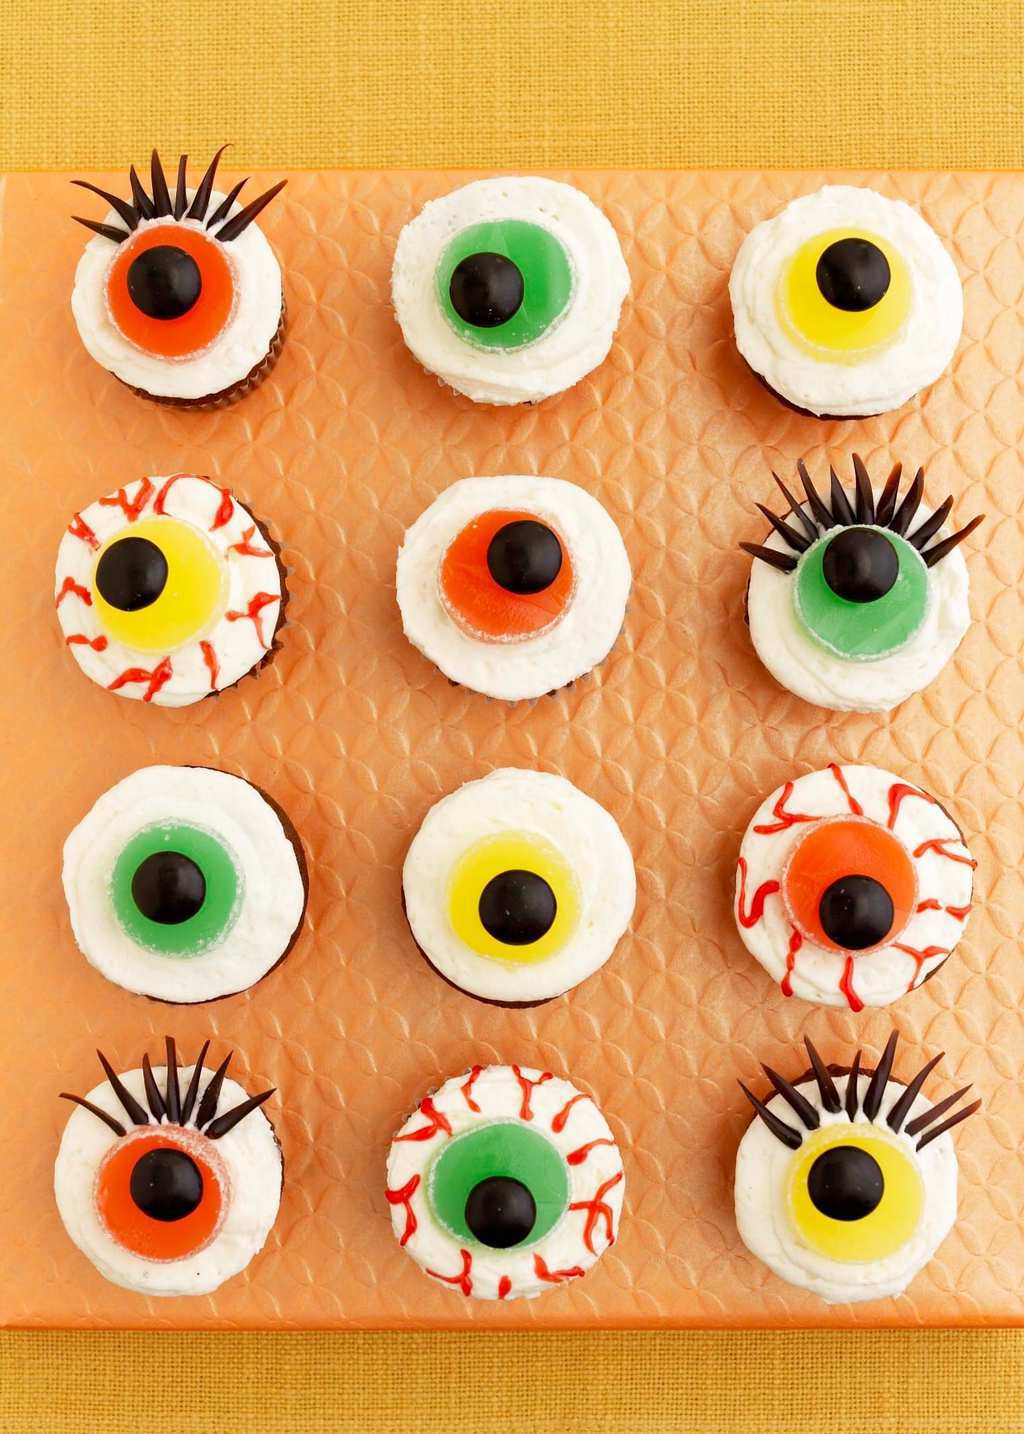 candy eyeballs on cupcakes for Halloween